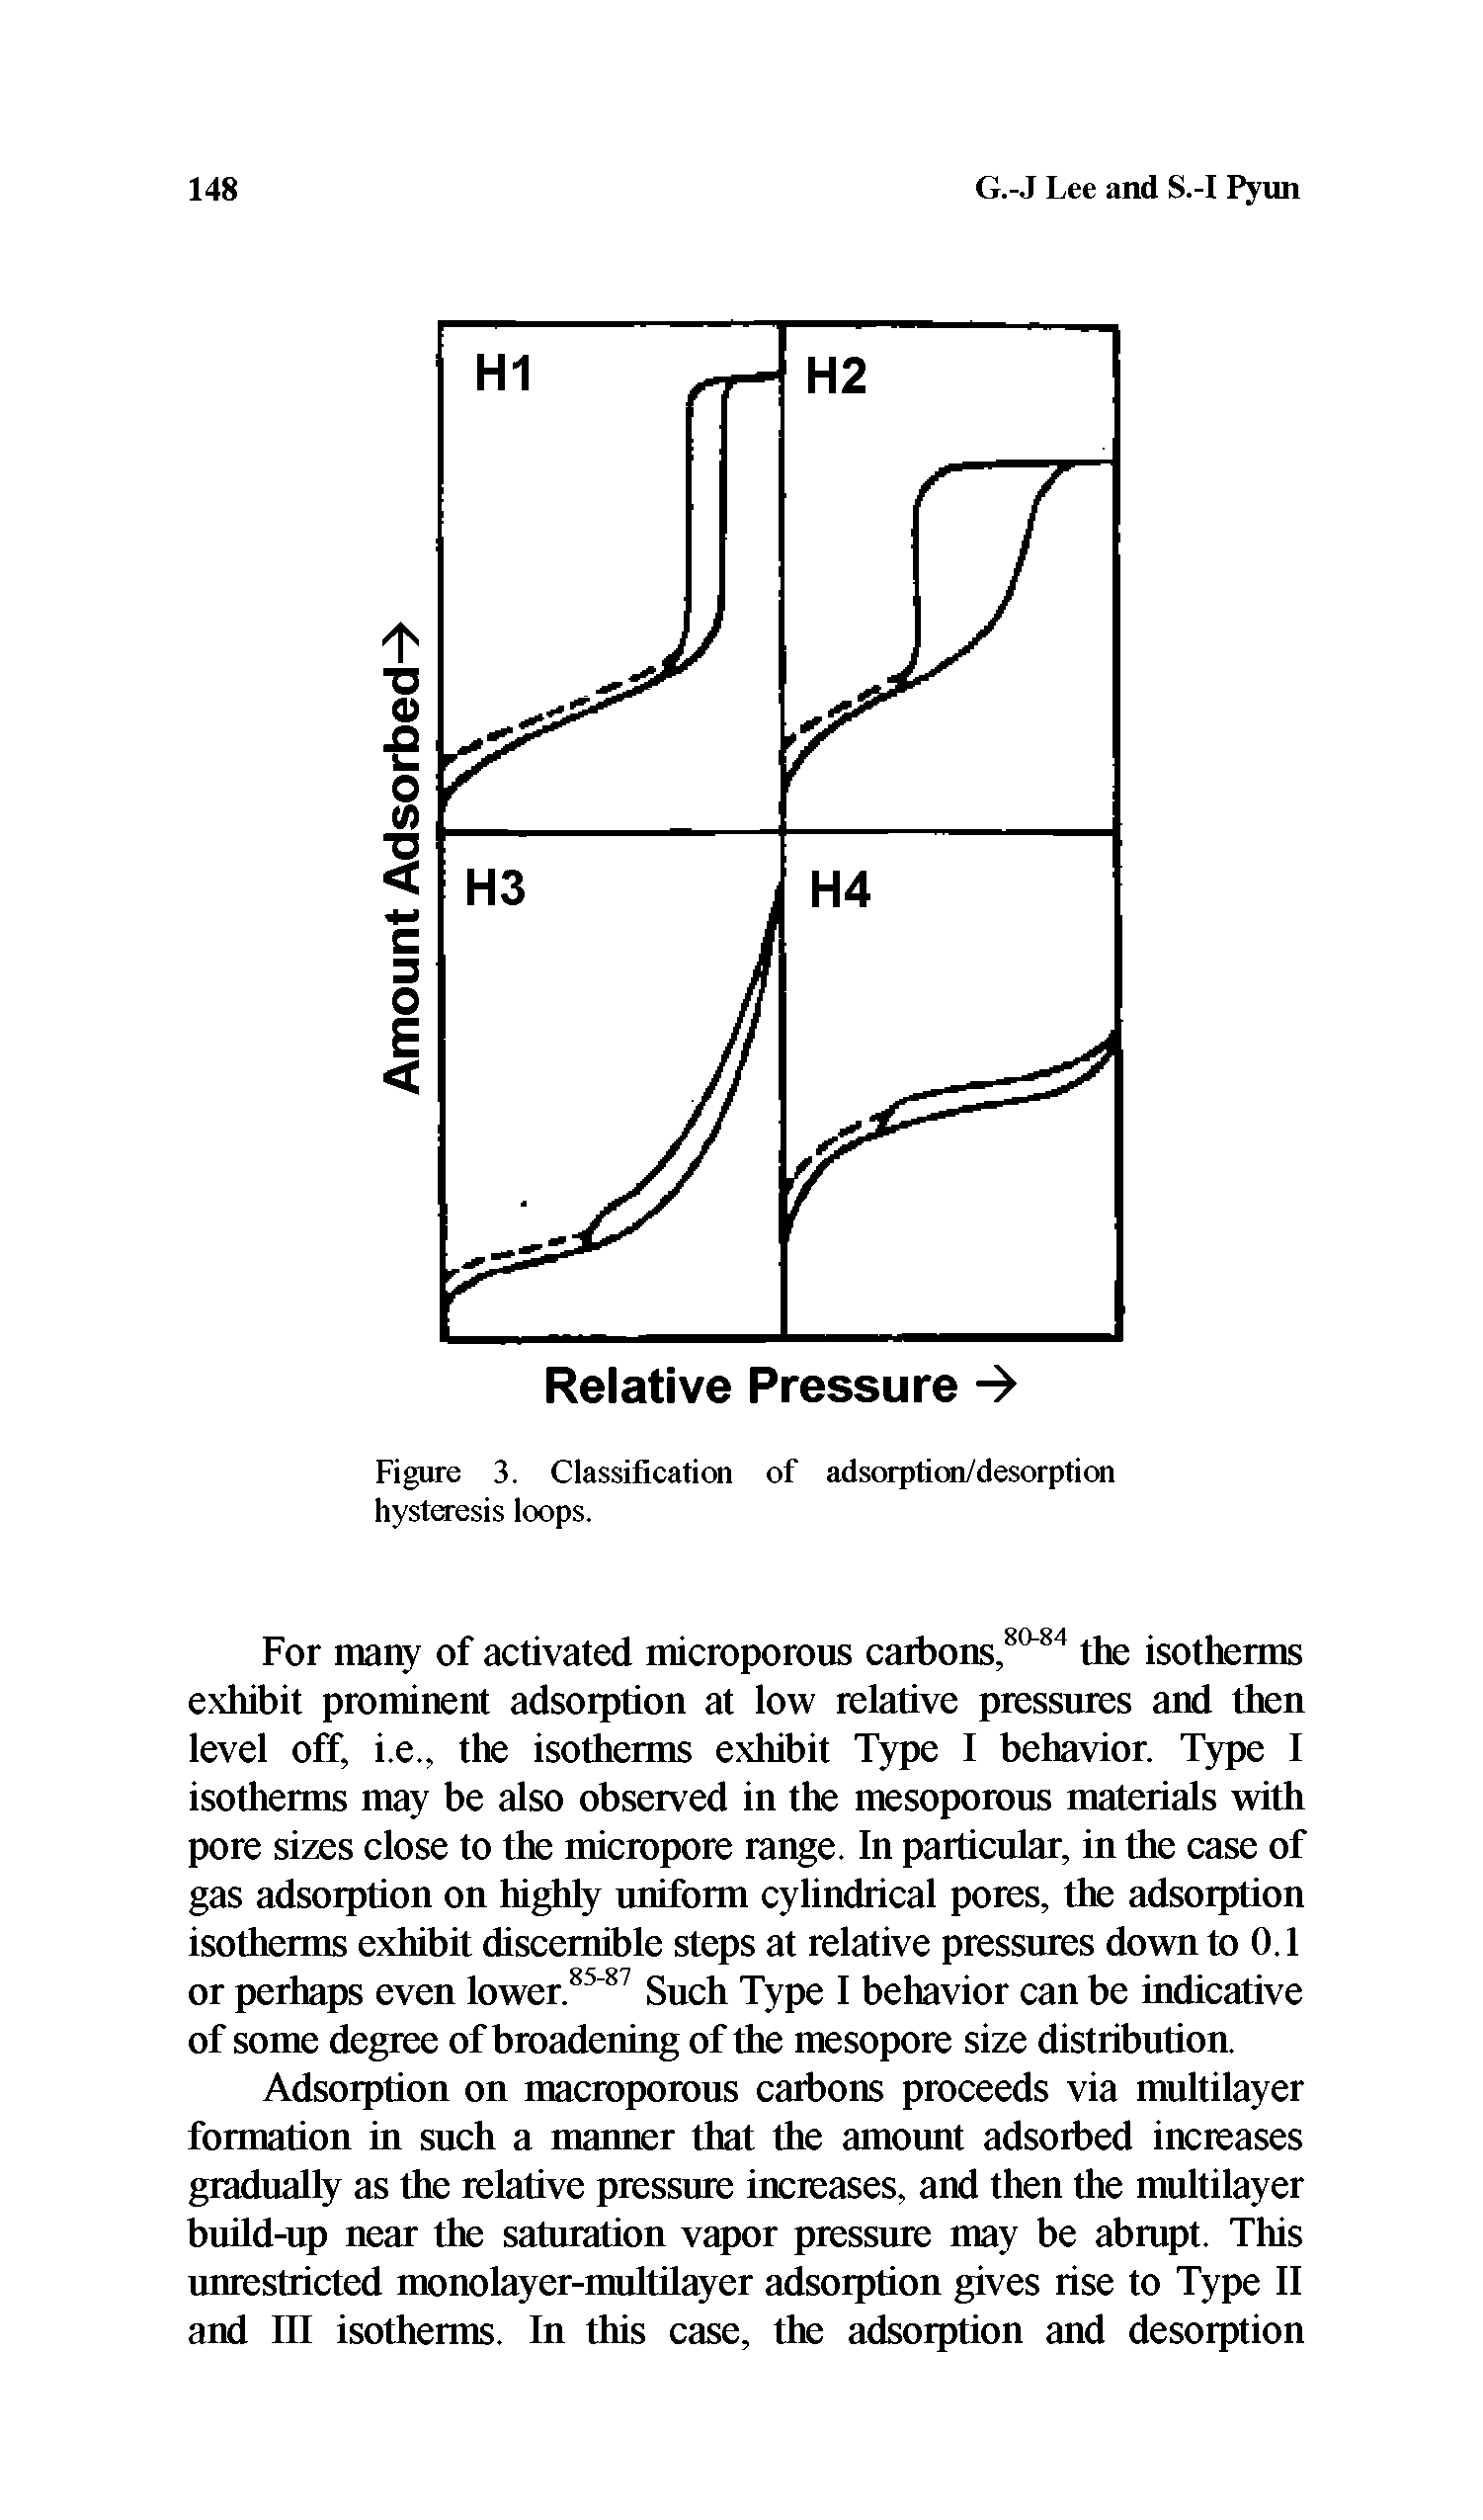 Figure 3. Classification of adsorption/desorption hysteresis loops.